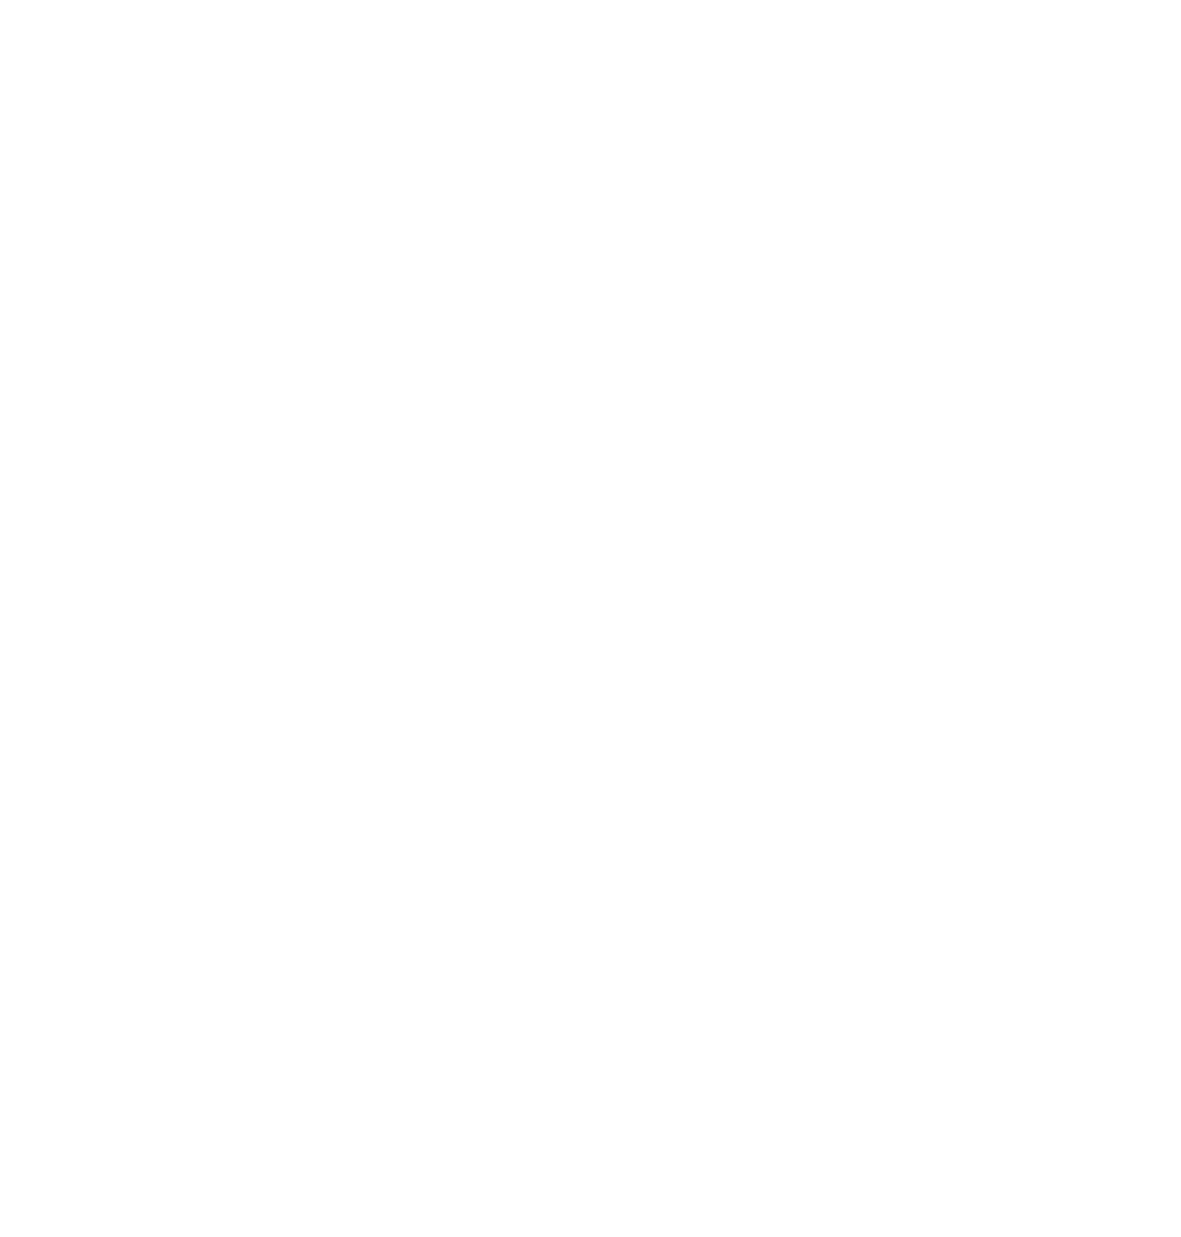 PHOTO WEDDING PLAN